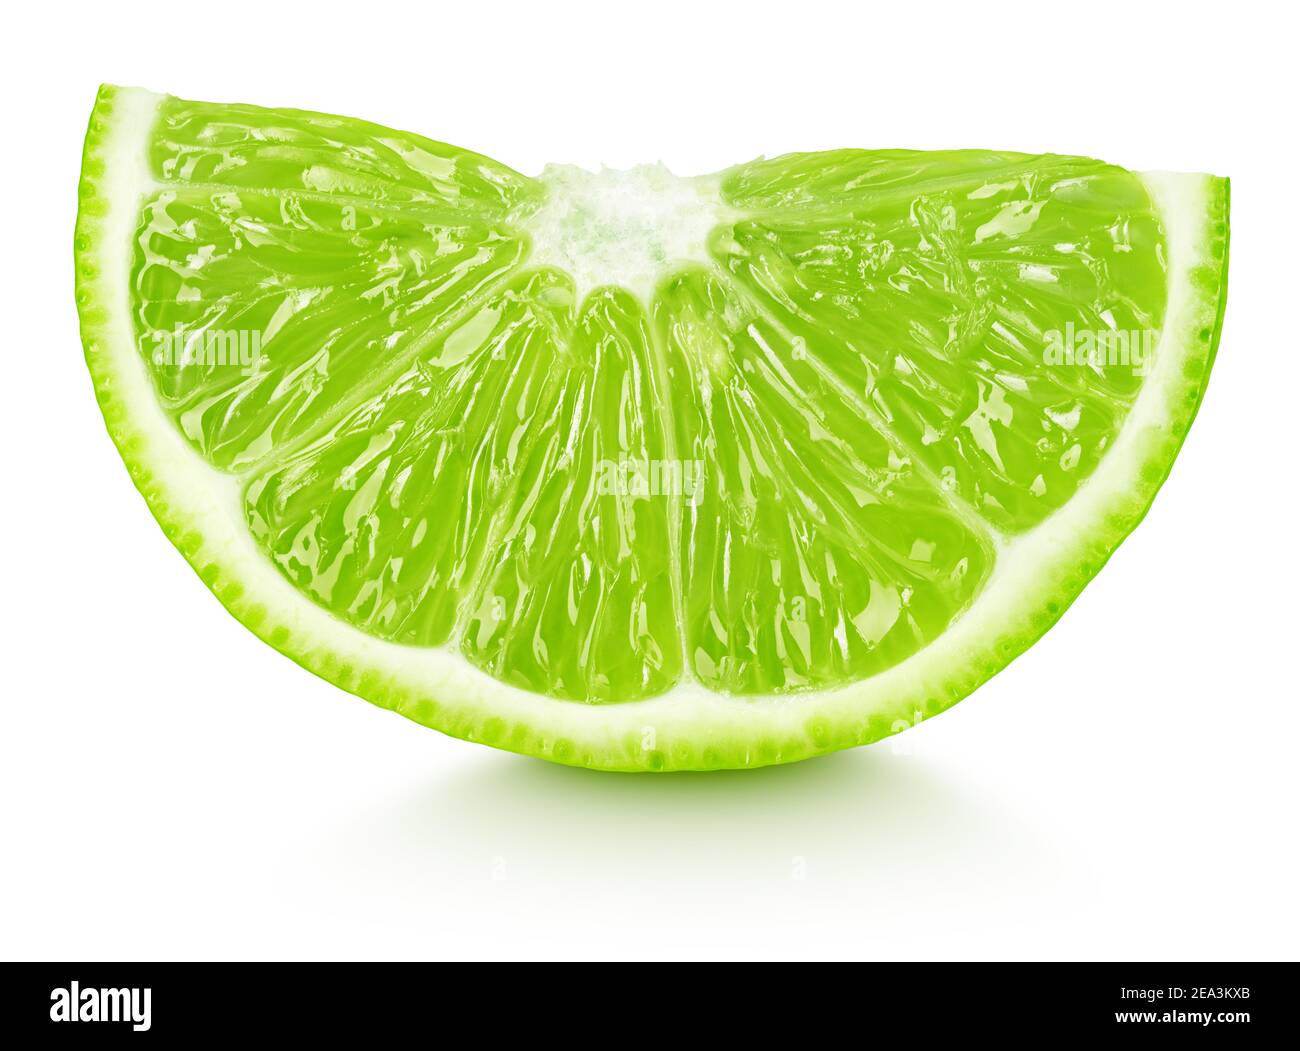 Ripe slice of green lime citrus fruit isolated on white background Stock Photo